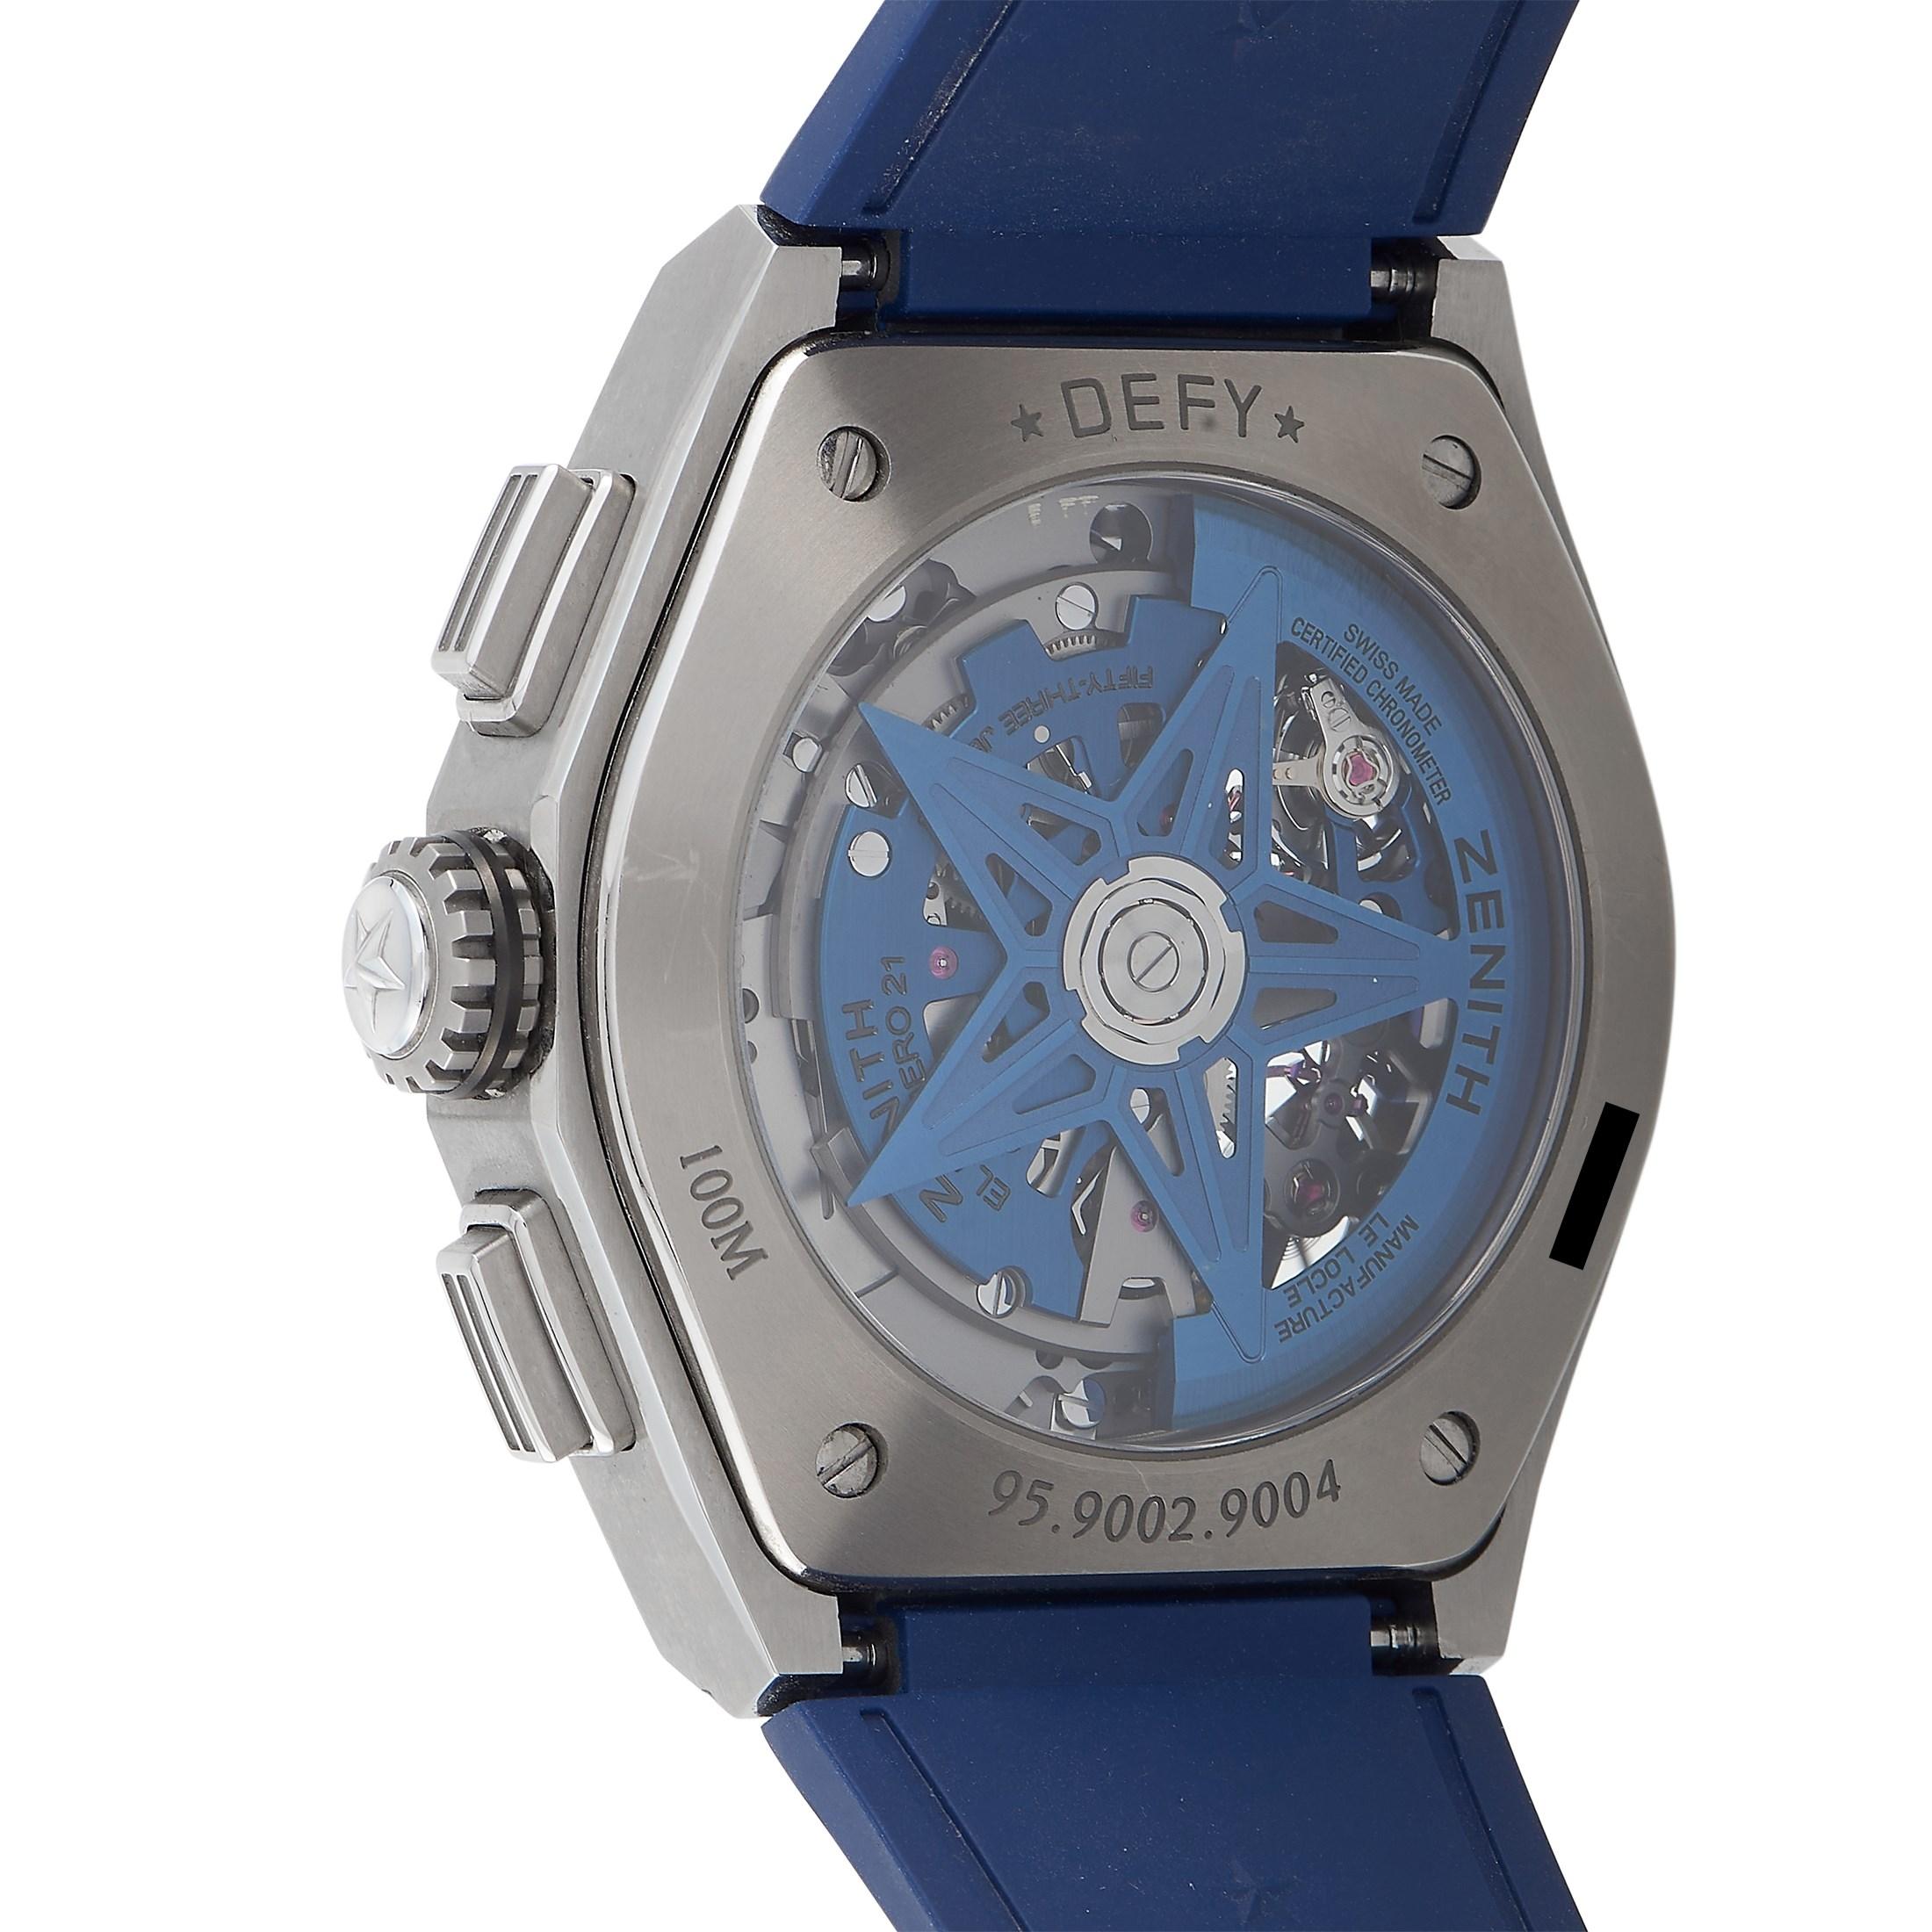 zenith zenith defy el primero 21 blue rubber men's watch 95.9002.9004/78.r590